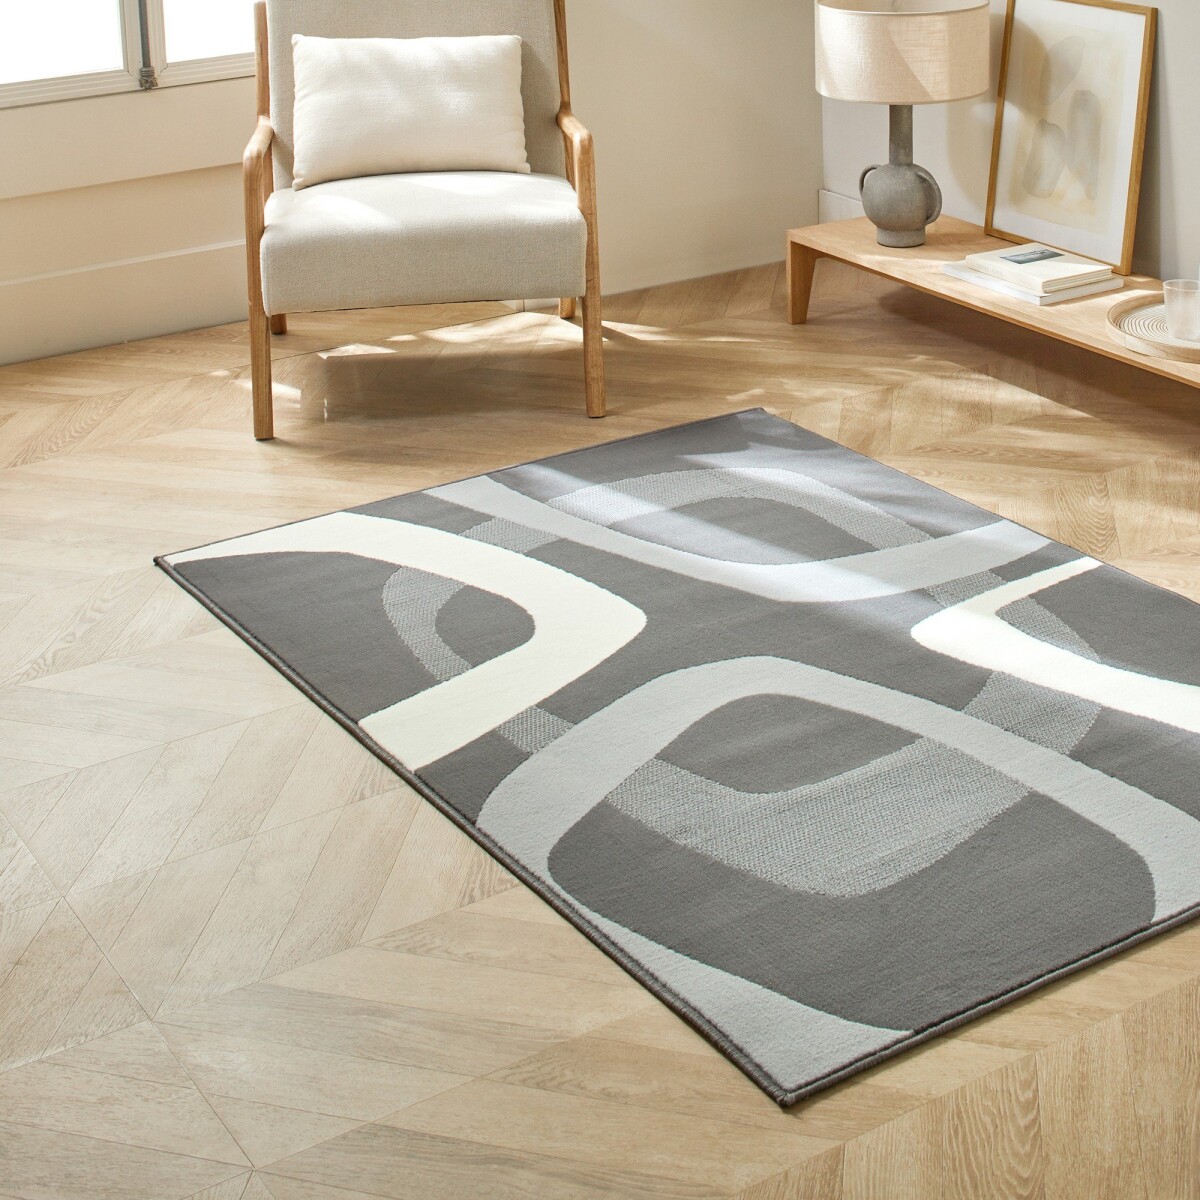 Blancheporte Obdélníkový koberec s retro motivem antracitová šedá 60x110cm